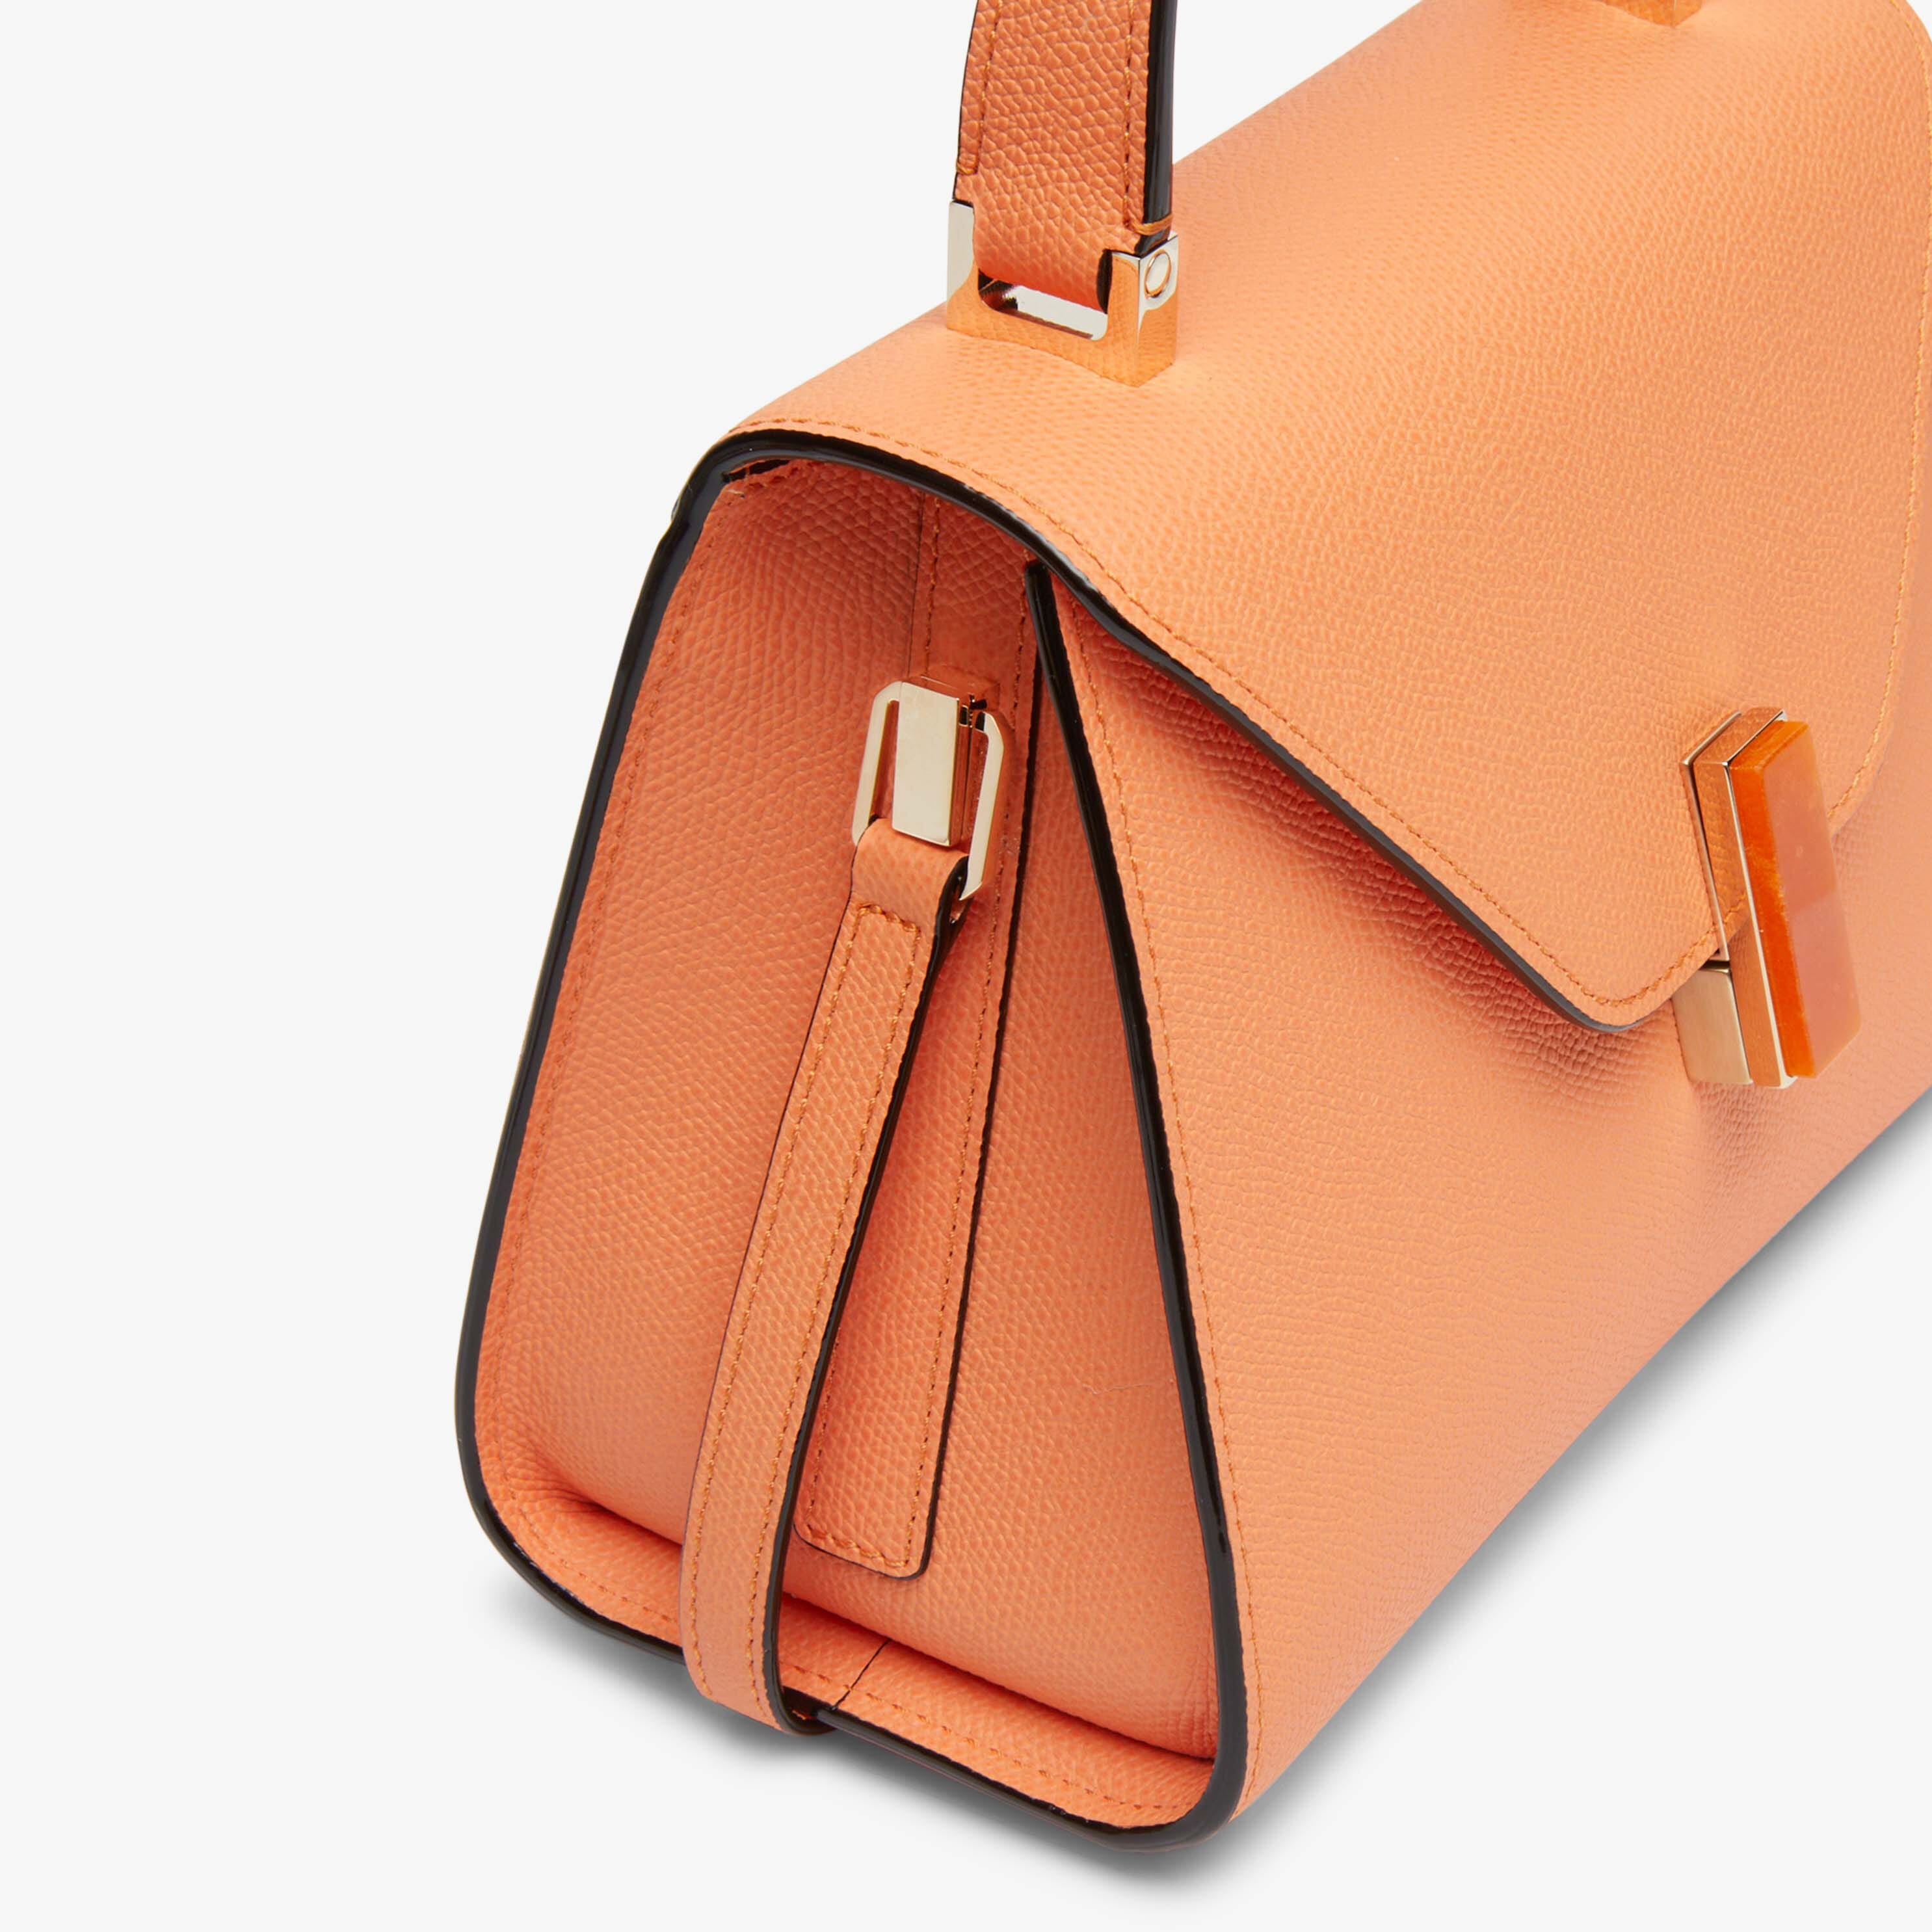 Iside Quarzo Top Handle Mini Bag - Peach Orange/Orange - Vitello VS - Valextra - 5